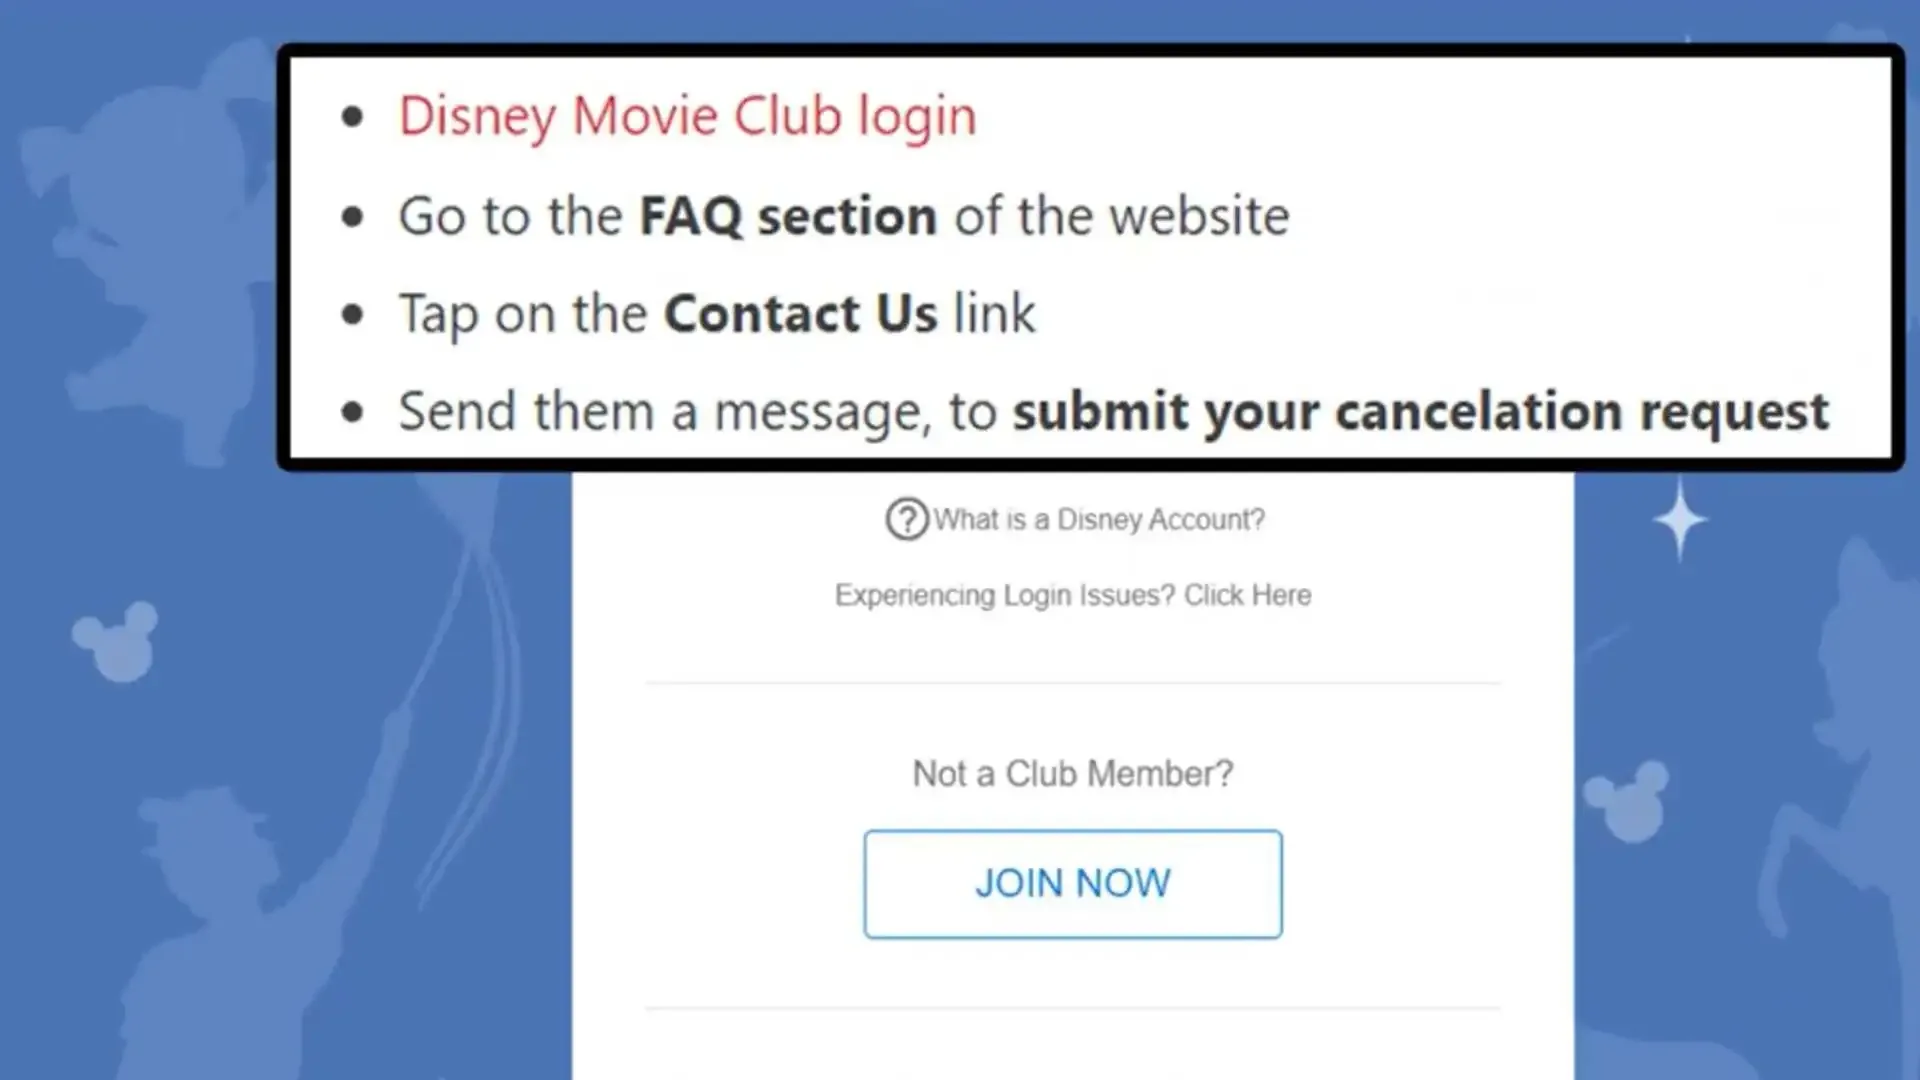 Go to FAQ section and cancel Disney Movie Club